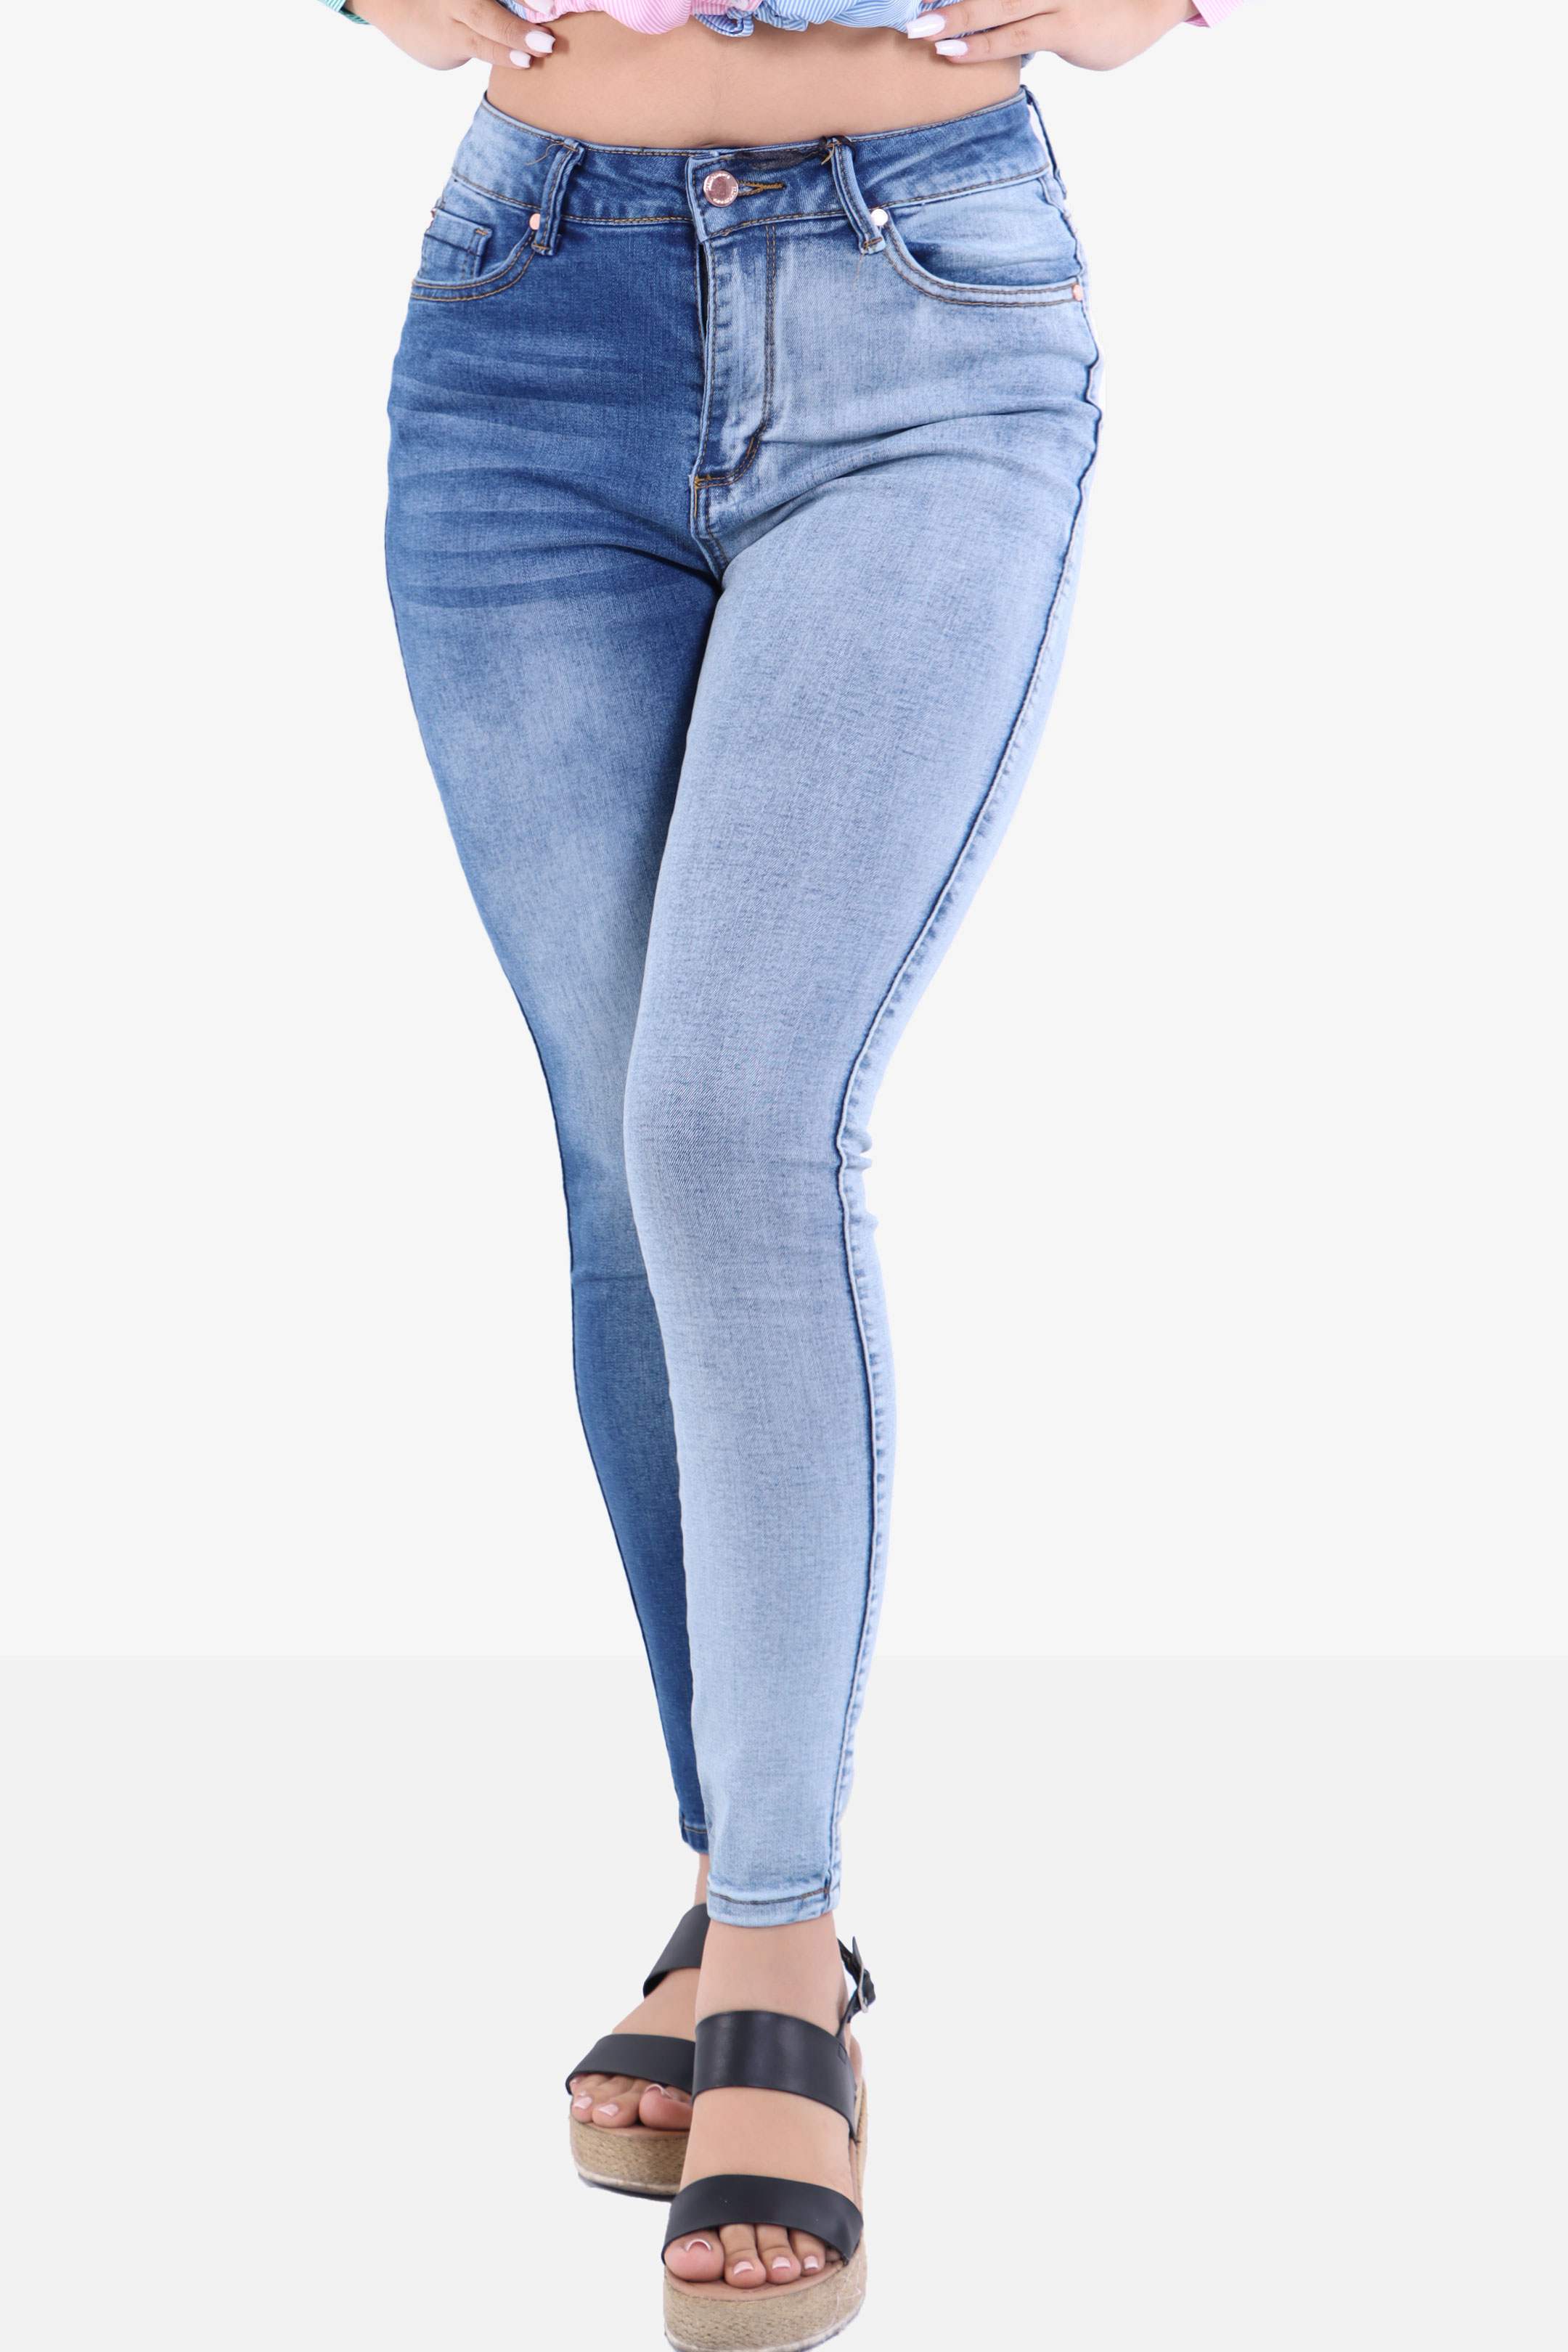 Jeans Fashion Nova